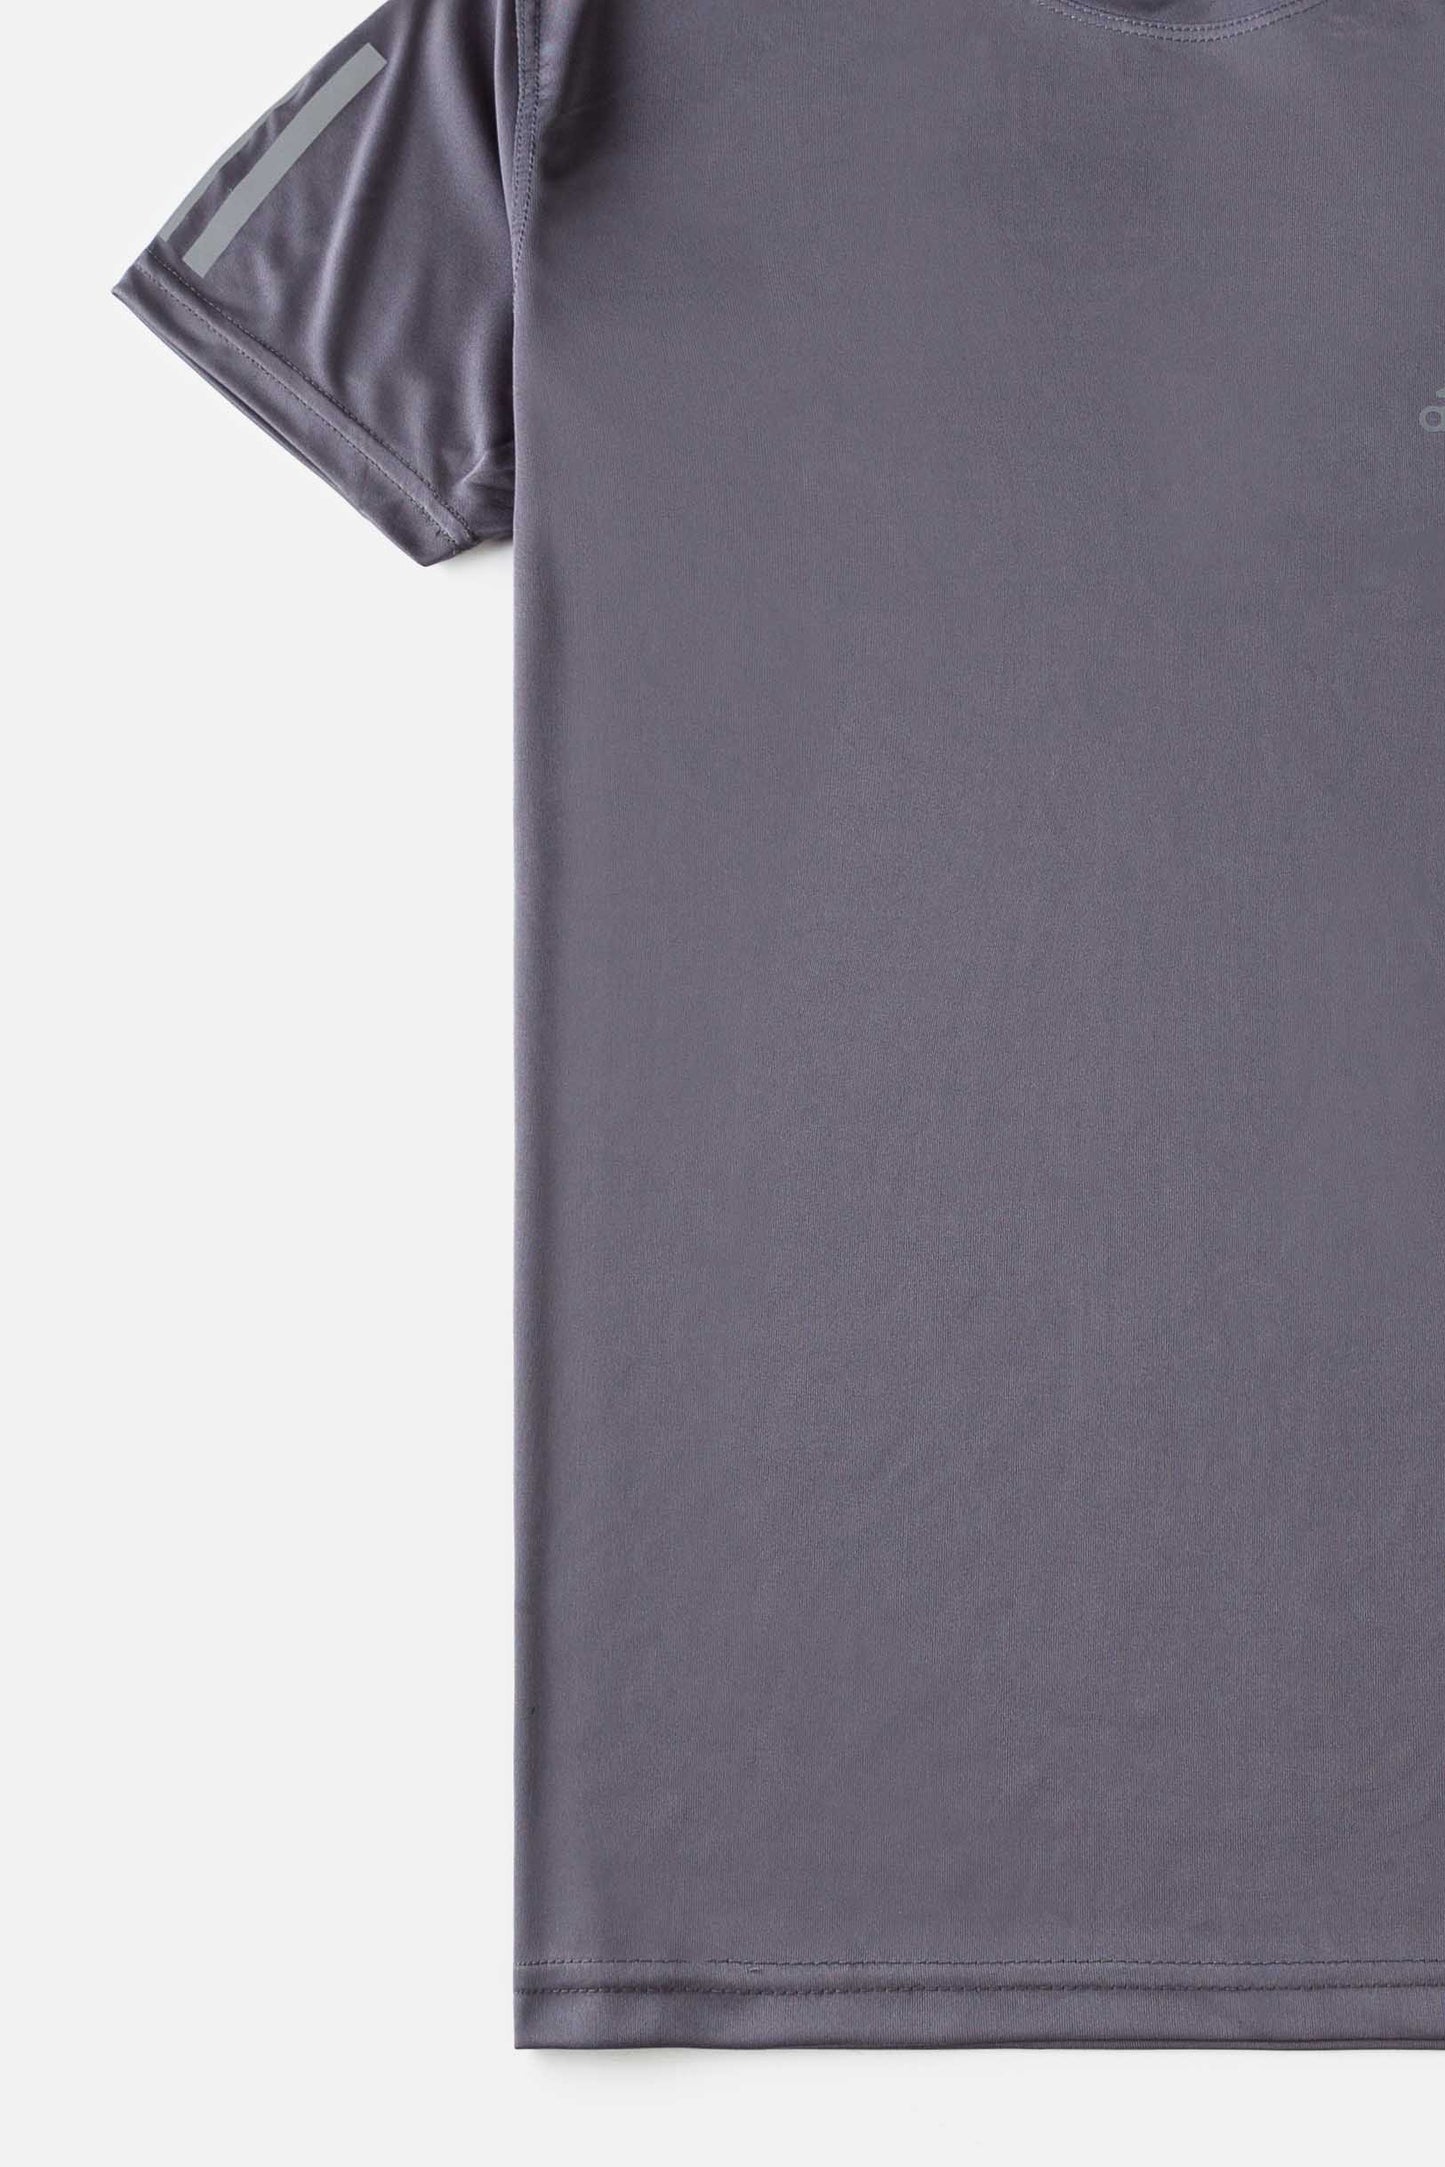 Under Armour Premium Quality Dri-FIT T-Shirt Steel Gray